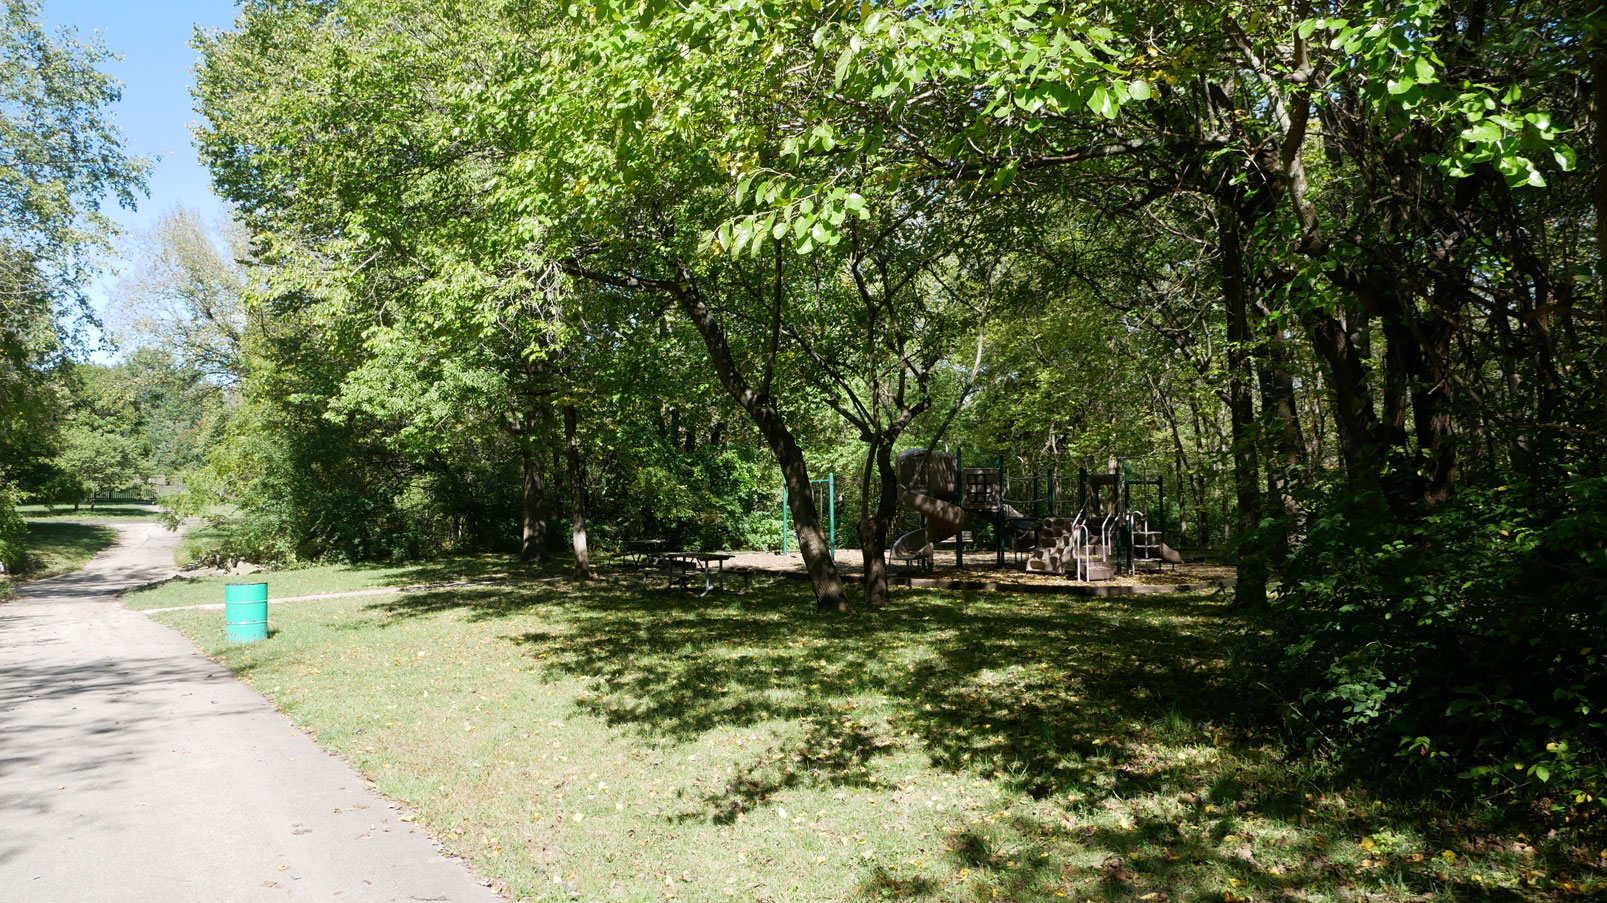 Amesbury Lake Park trail and playground